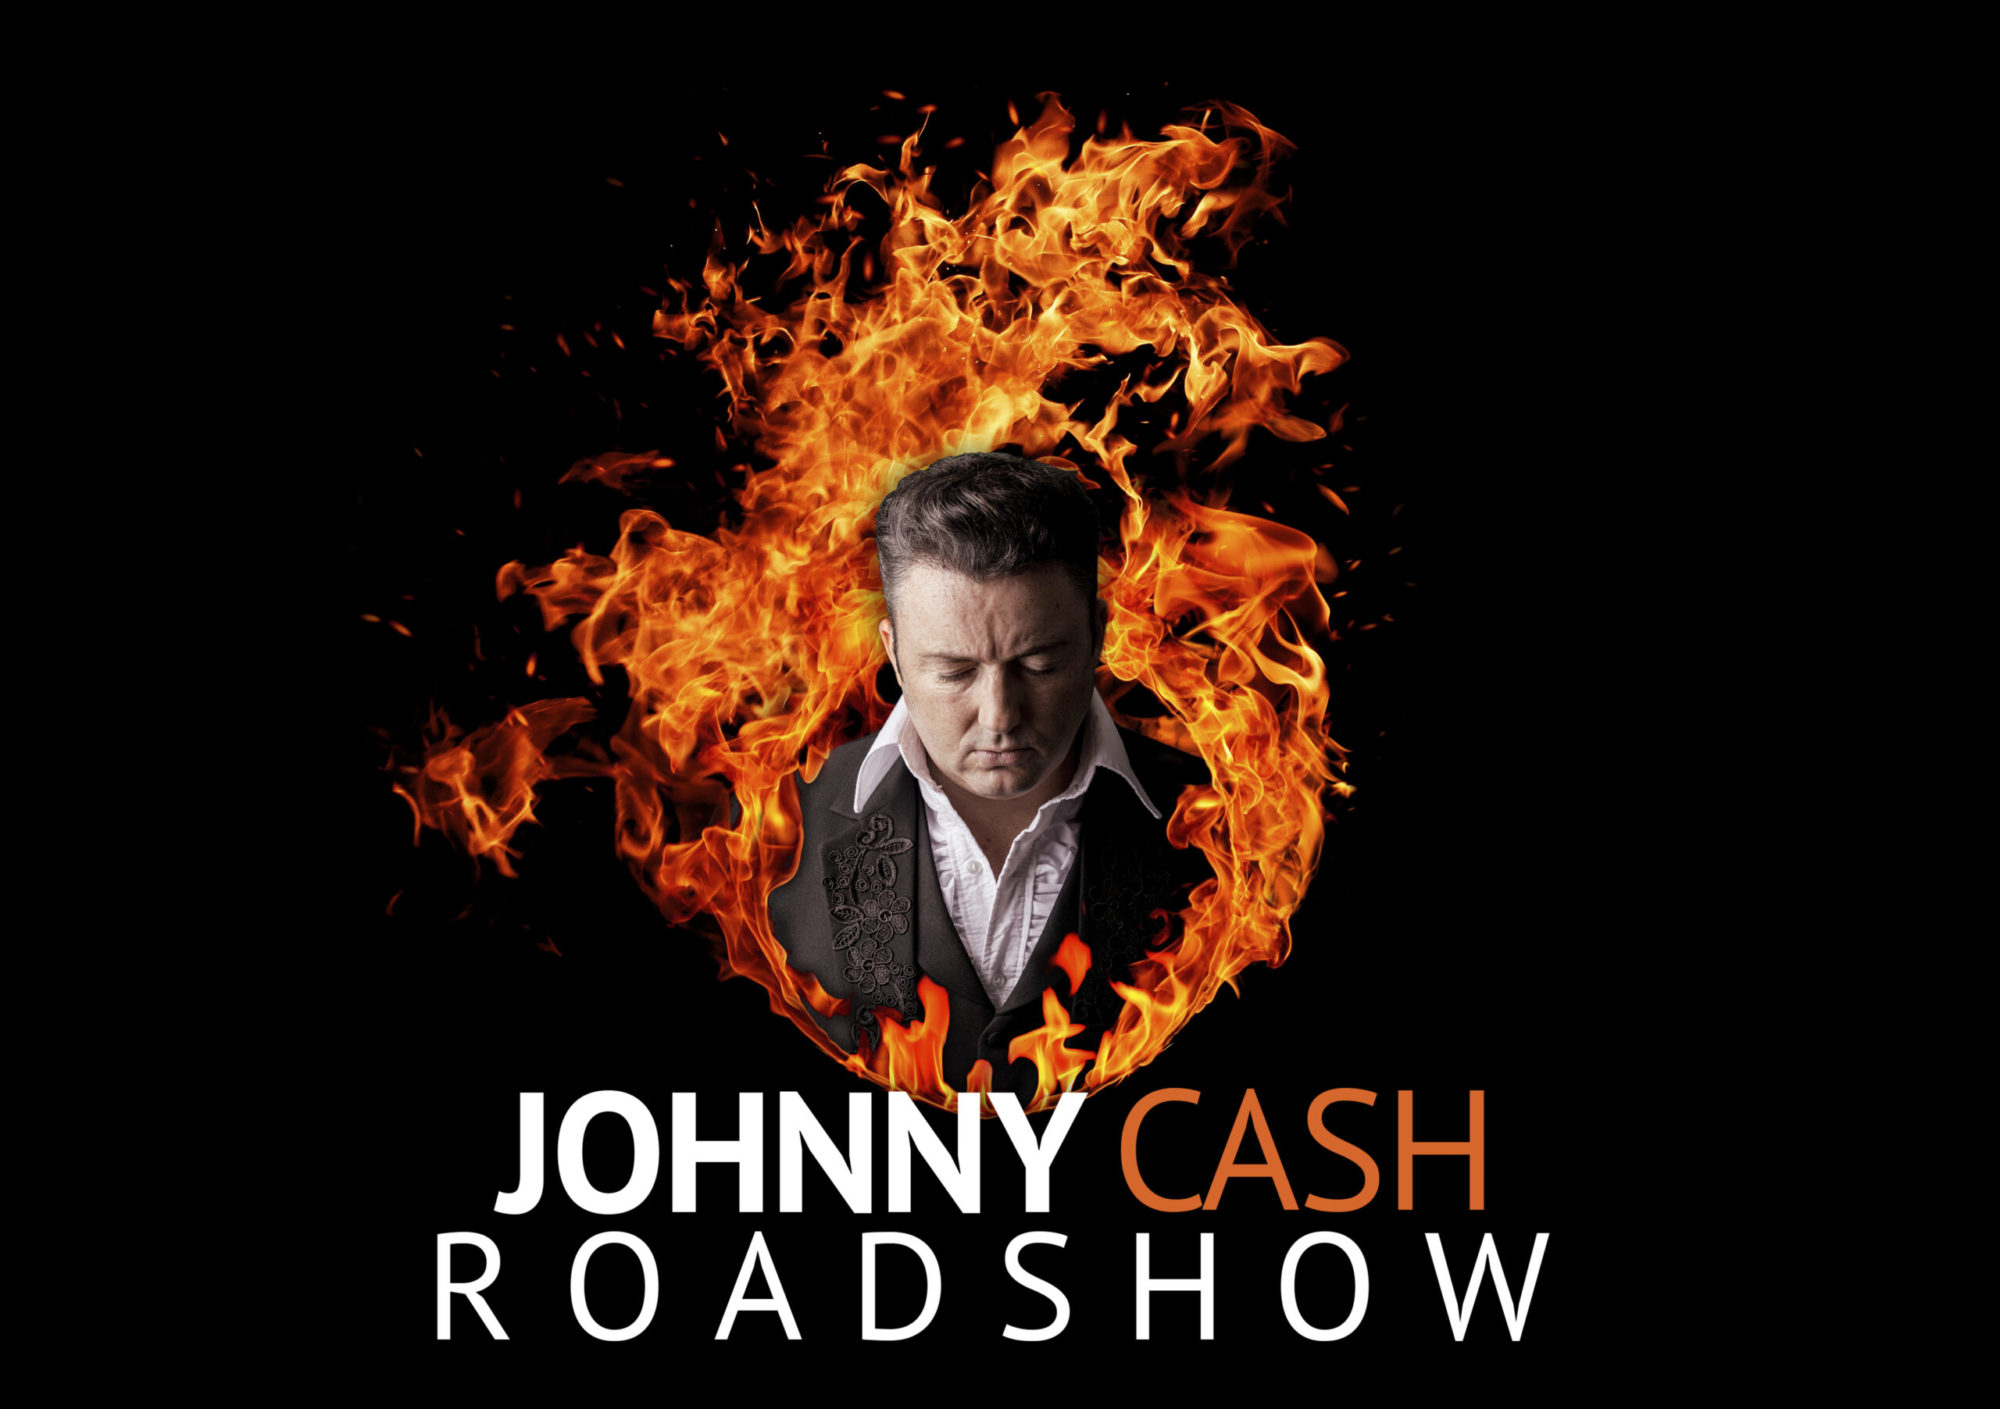 THE JOHNNY CASH ROADSHOW